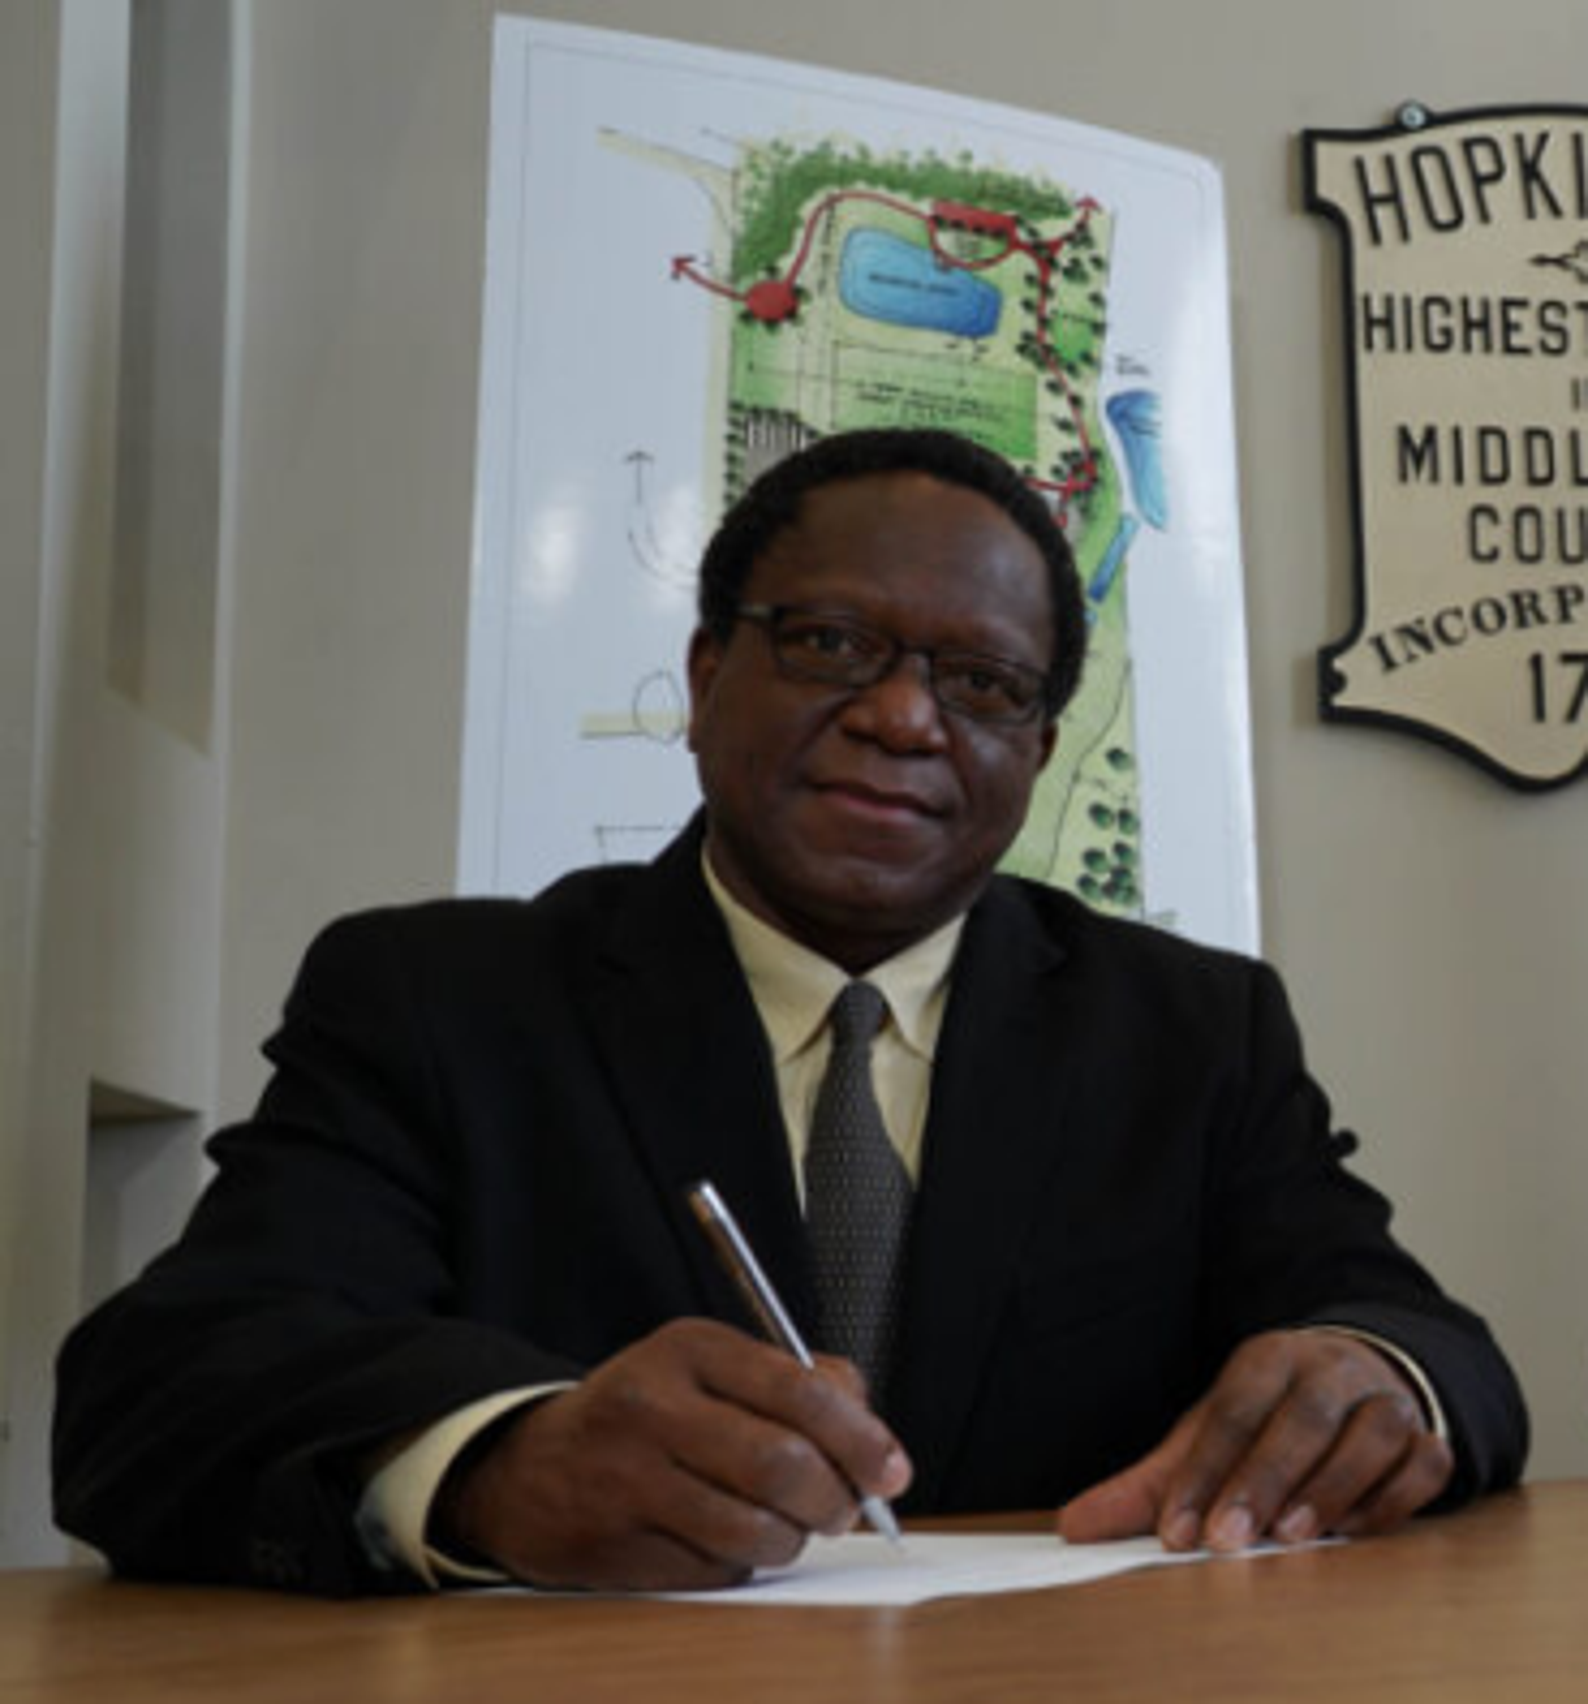 Hopkinton Town Manager Norman Khumalo